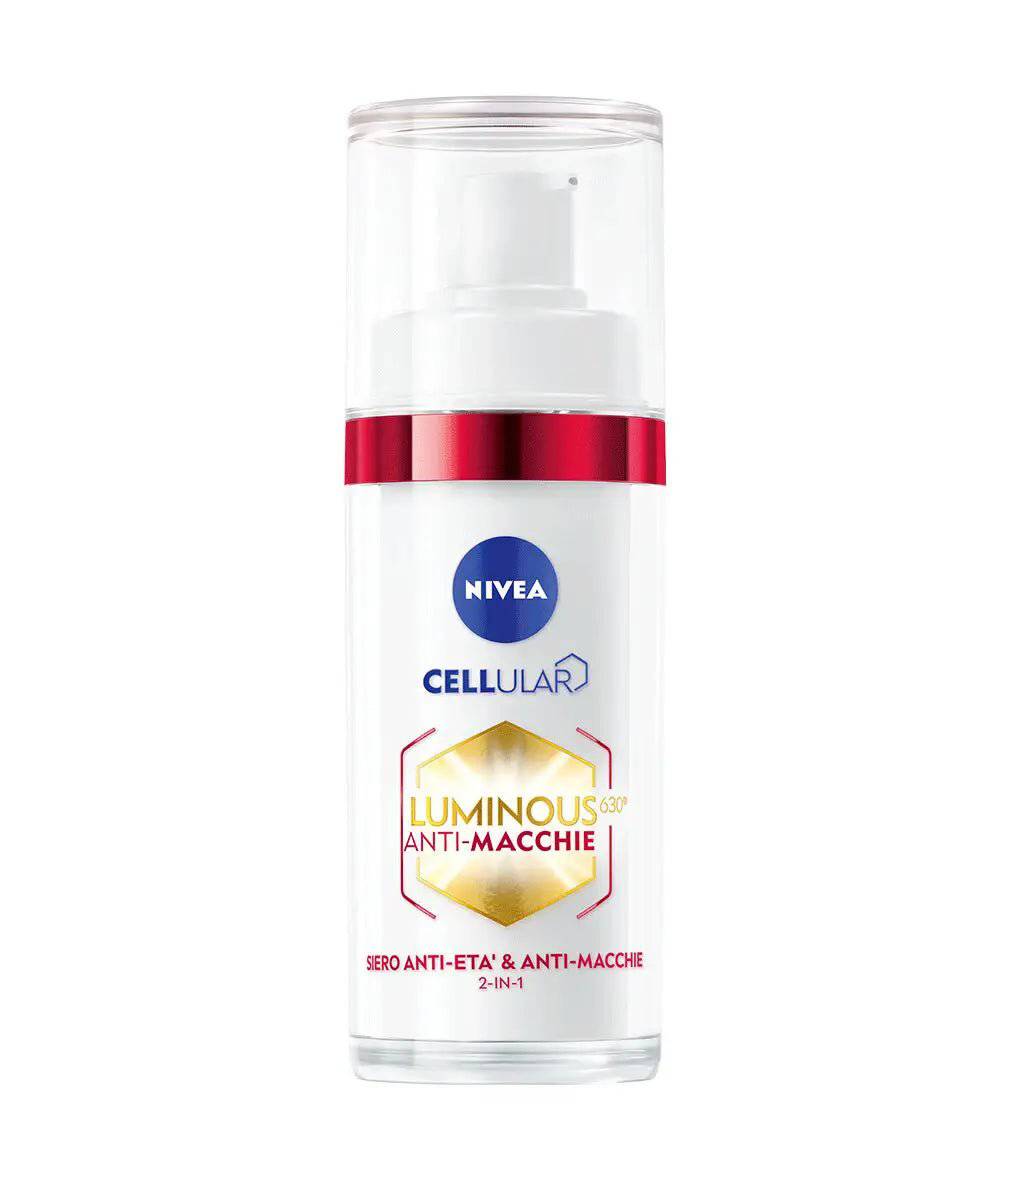 Nivea Cellular Luminous 630 Siero Anti Età e Antimacchie 2in1 con Booster di Collagene - Jasmine Parfums- [ean]